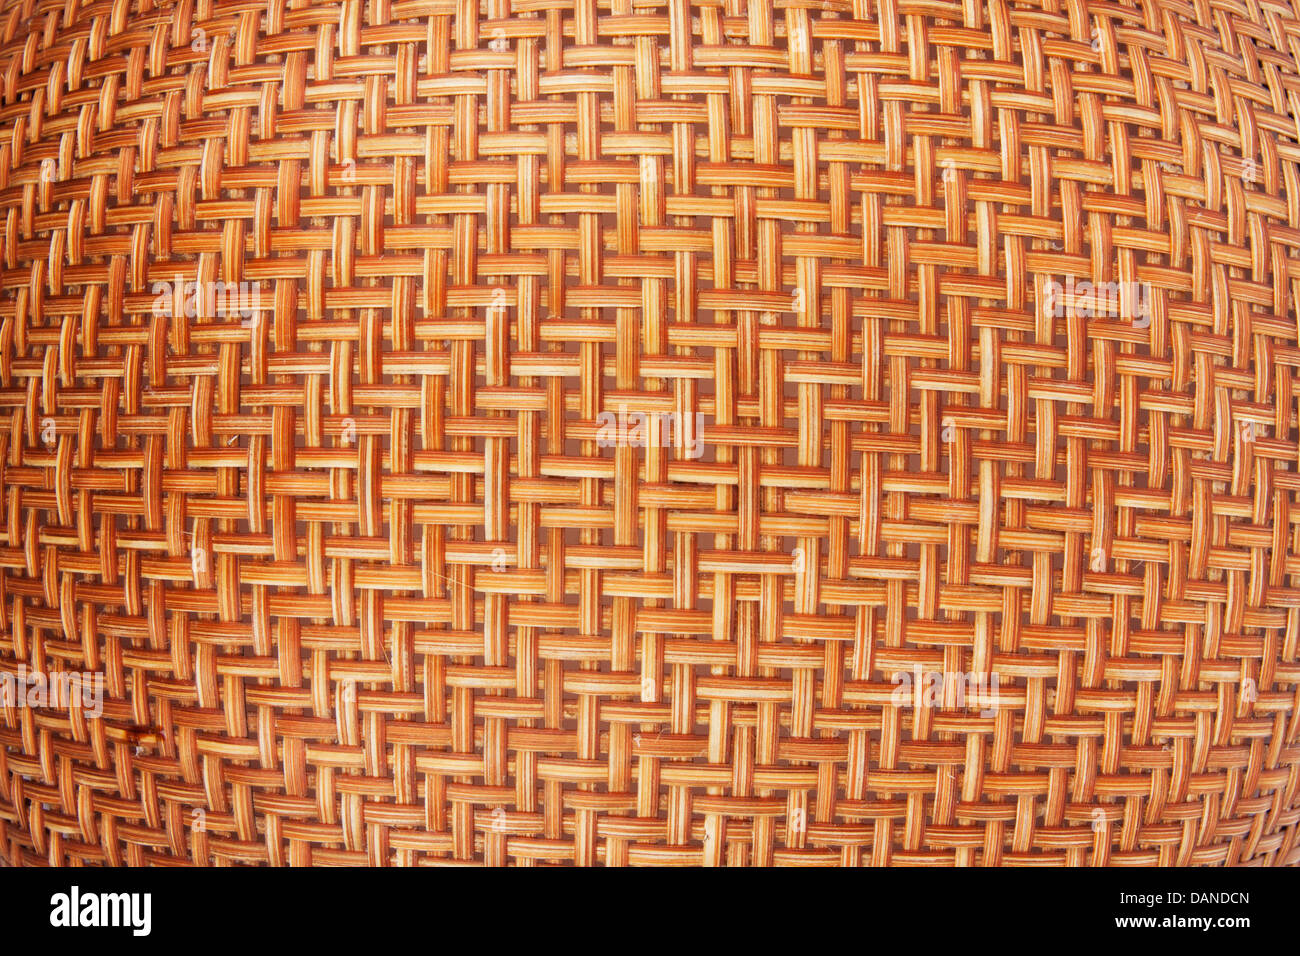 Weaving rattan basket Stock Photo